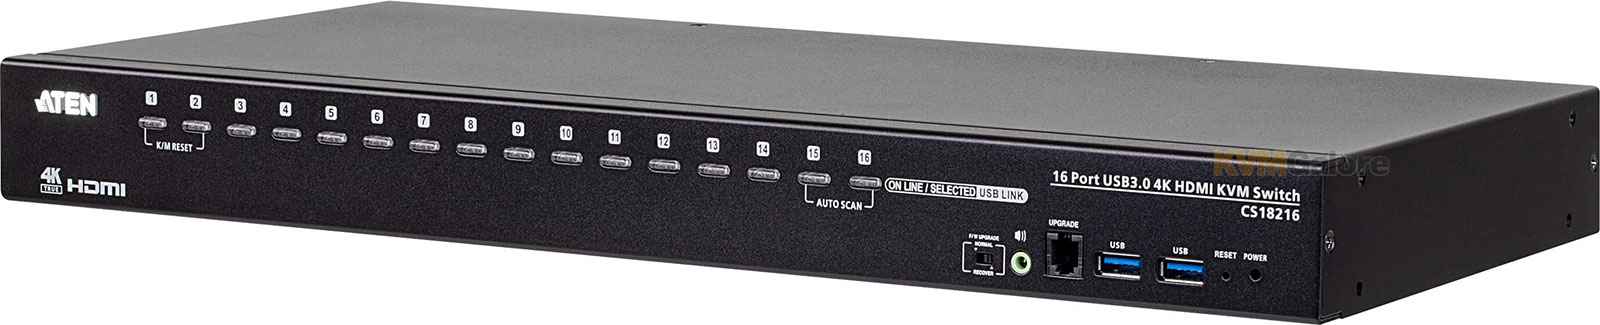 CS18216 Aten 16-port USB 3.0 4K HDMI KVM Switch NEW - KVM Solutions